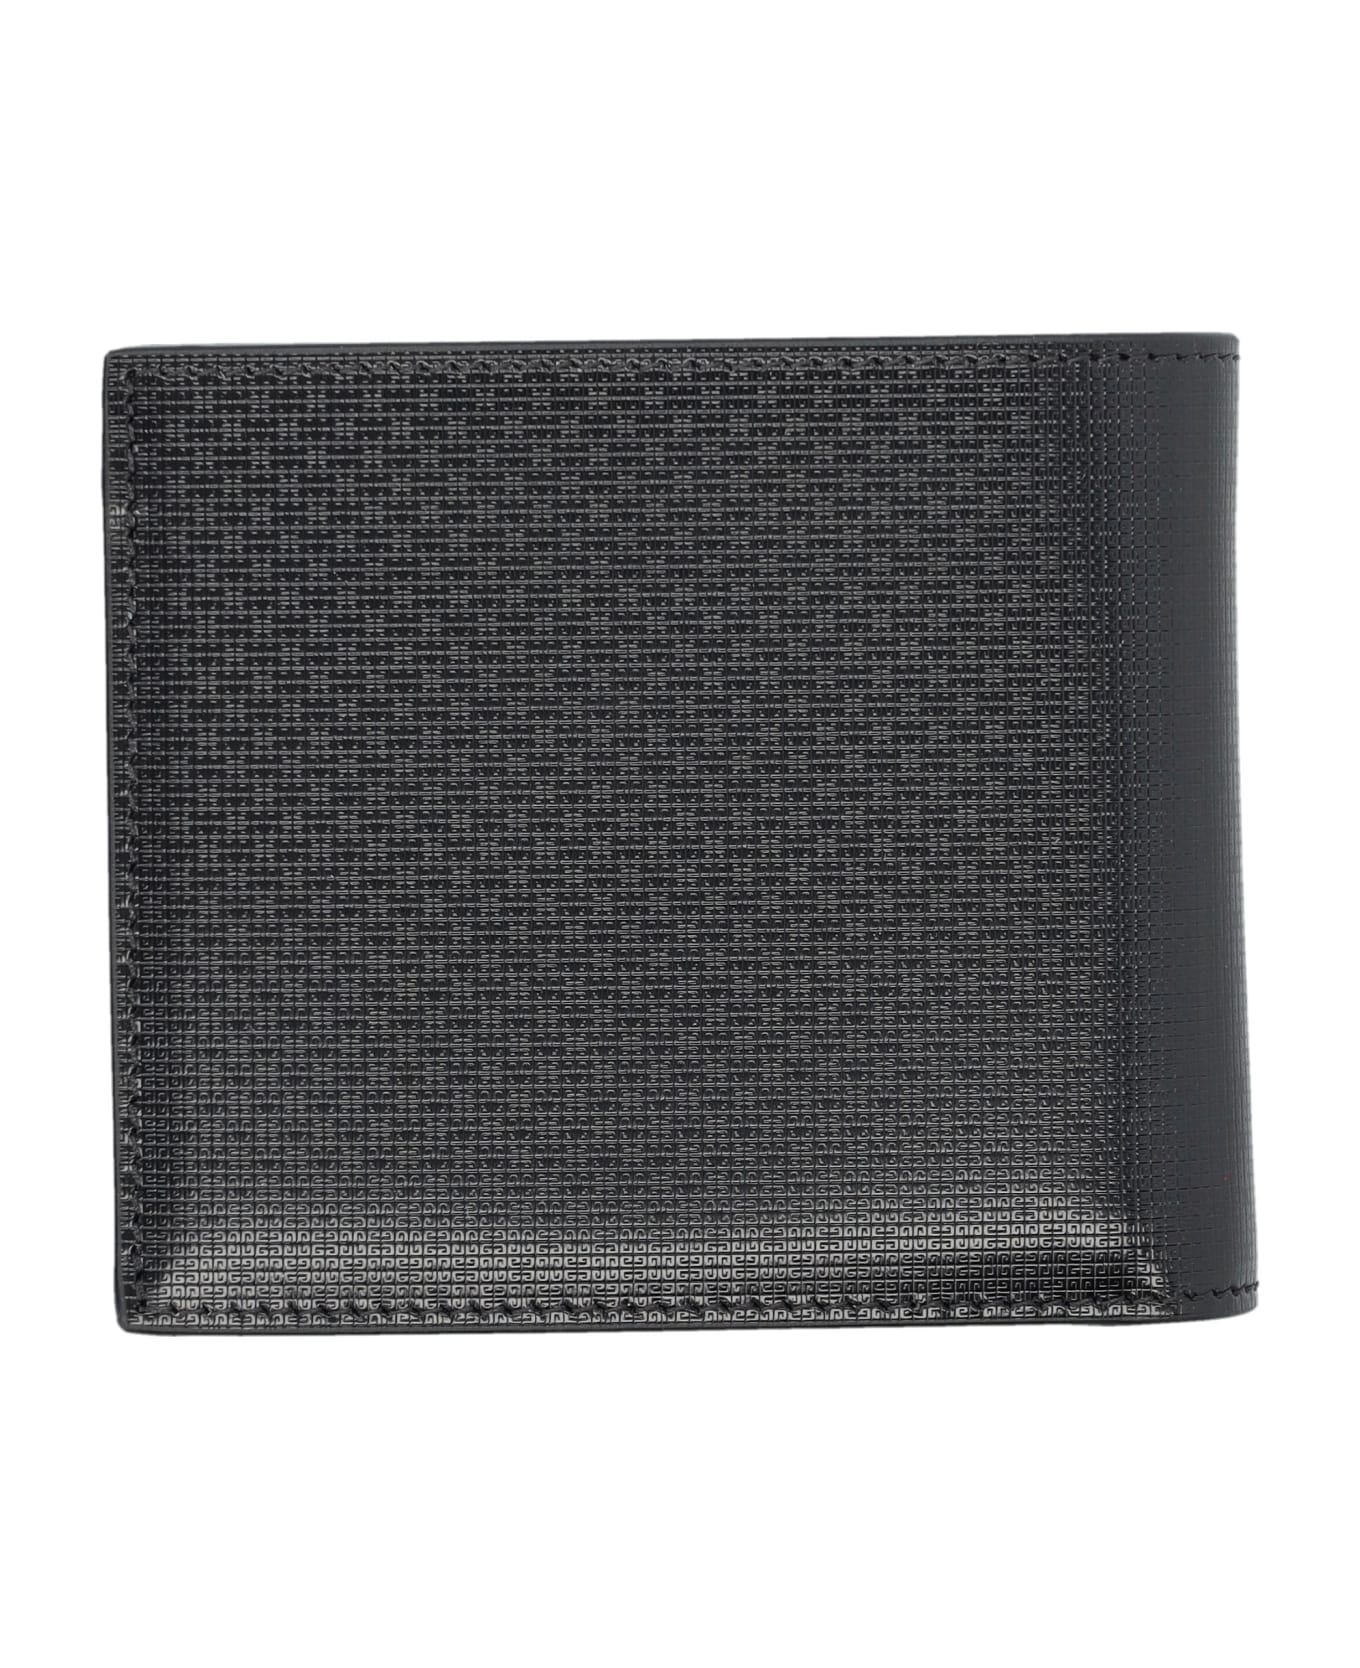 Givenchy 4cc Billfold Coin Wallet - BLACK